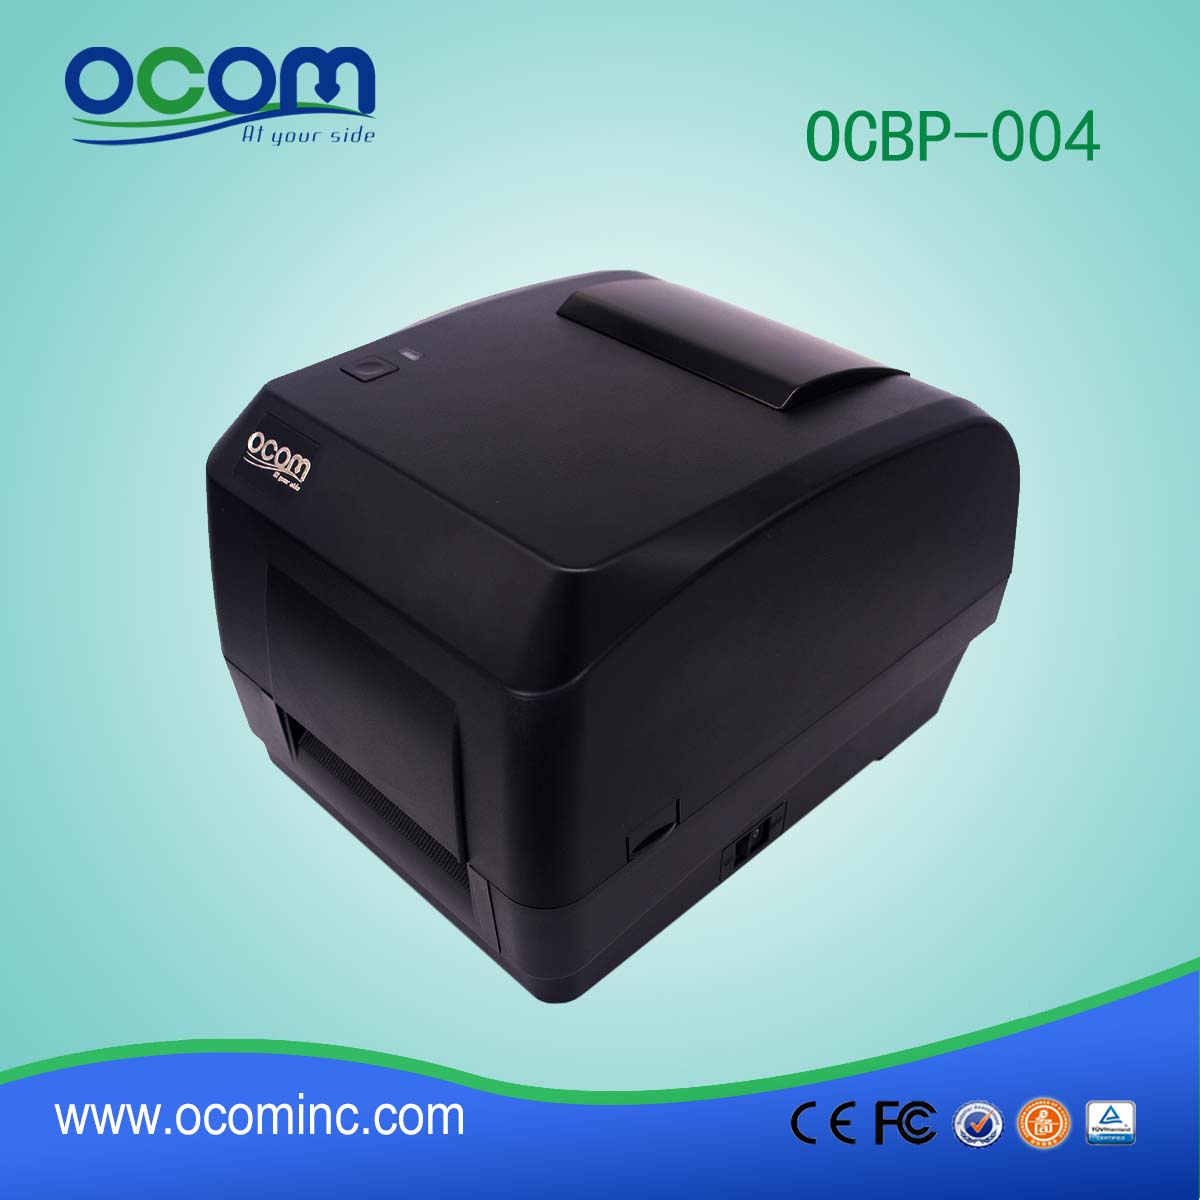 OCBP-004B-L 300DPI Transferencia térmica y impresora de etiquetas de código de barras térmicas directas